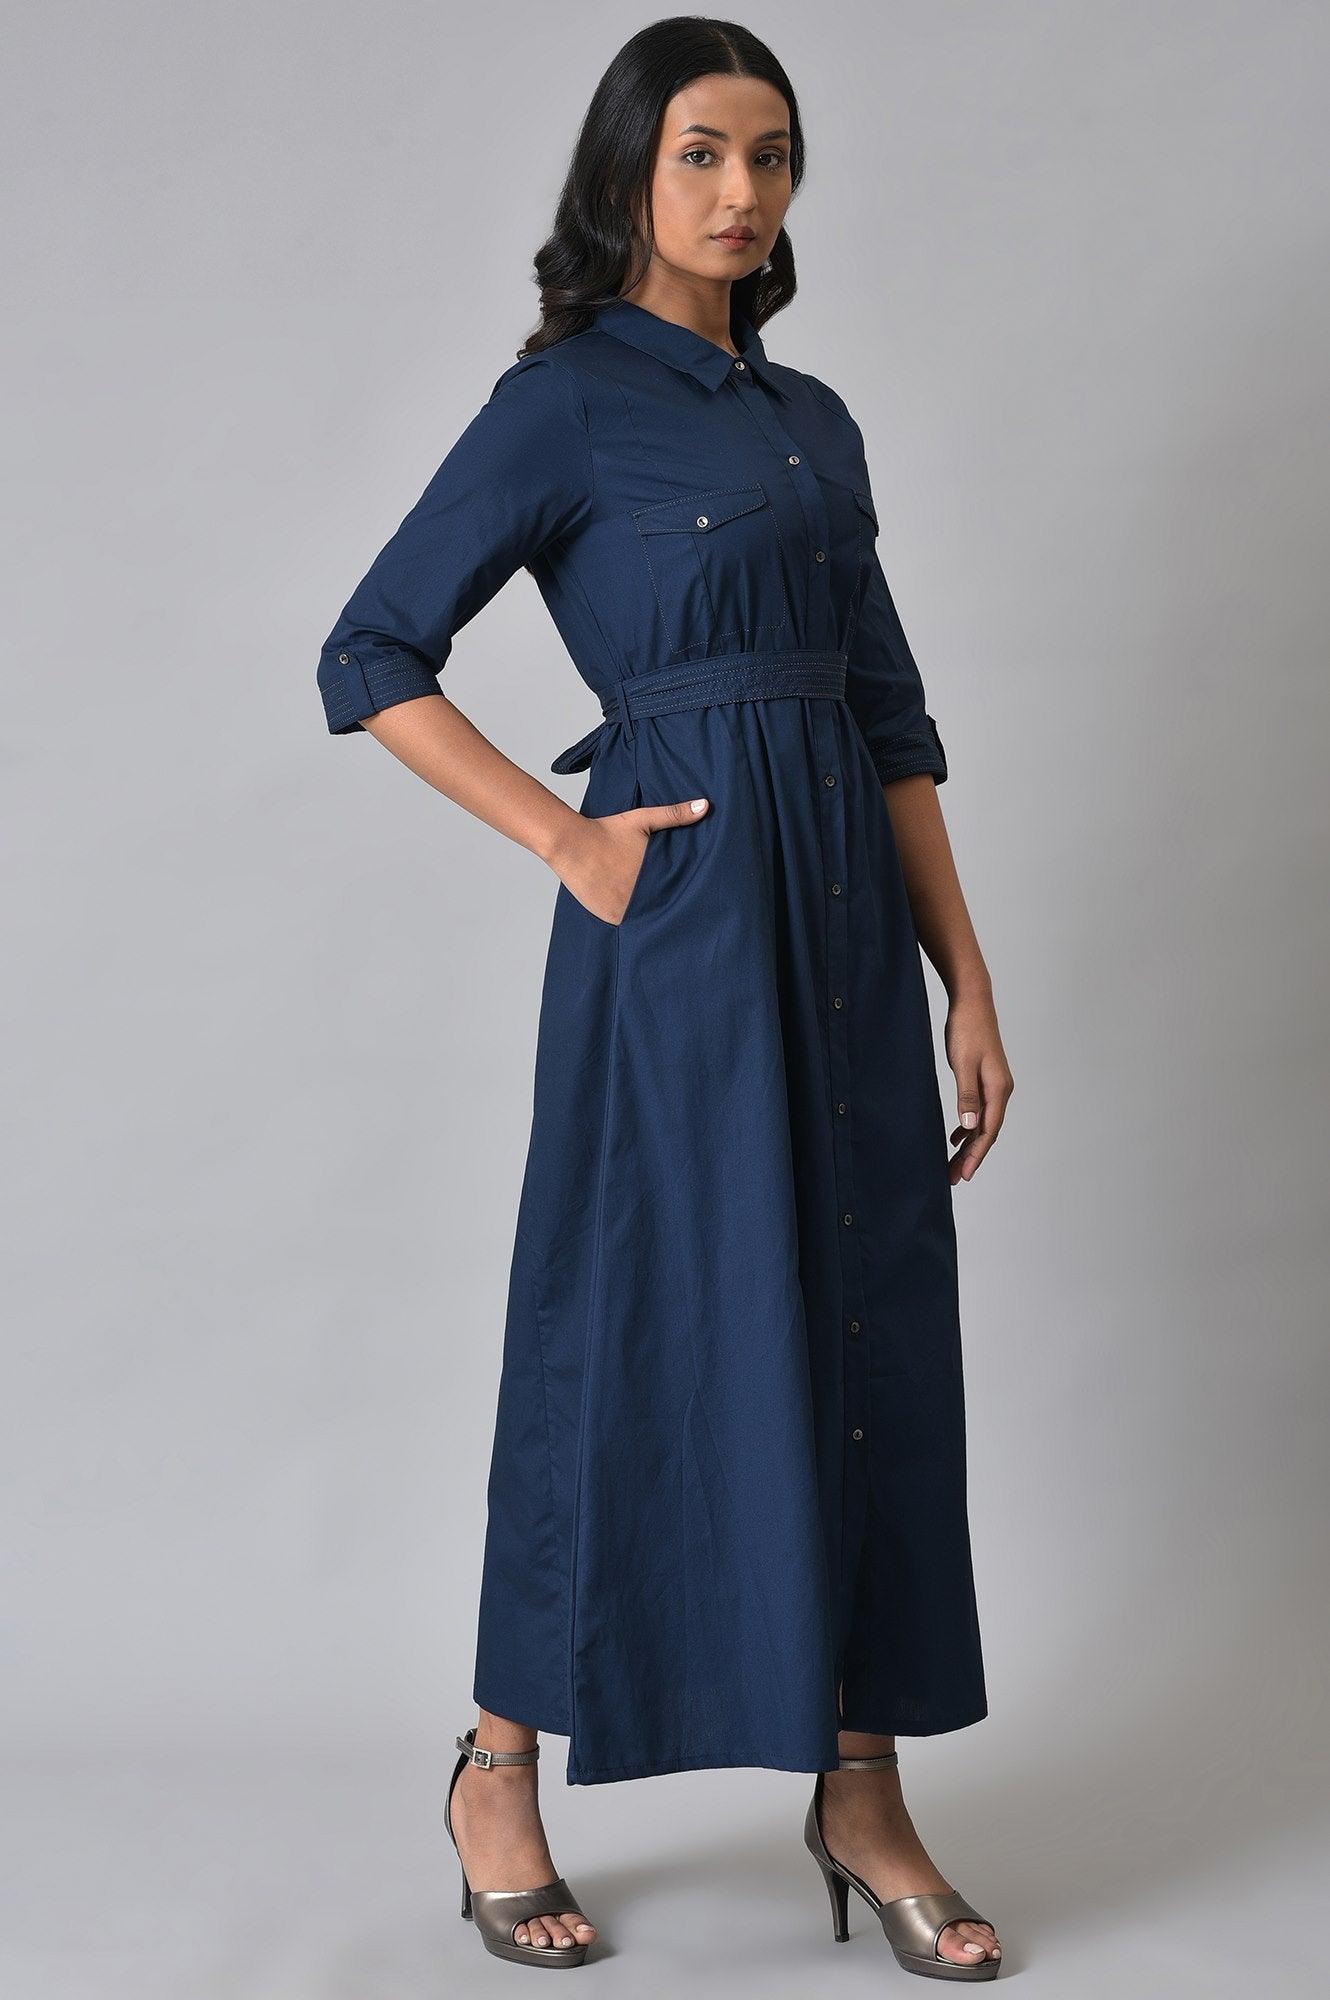 Plus Size Navy Blue Long Shirt Dress With Belt - wforwoman